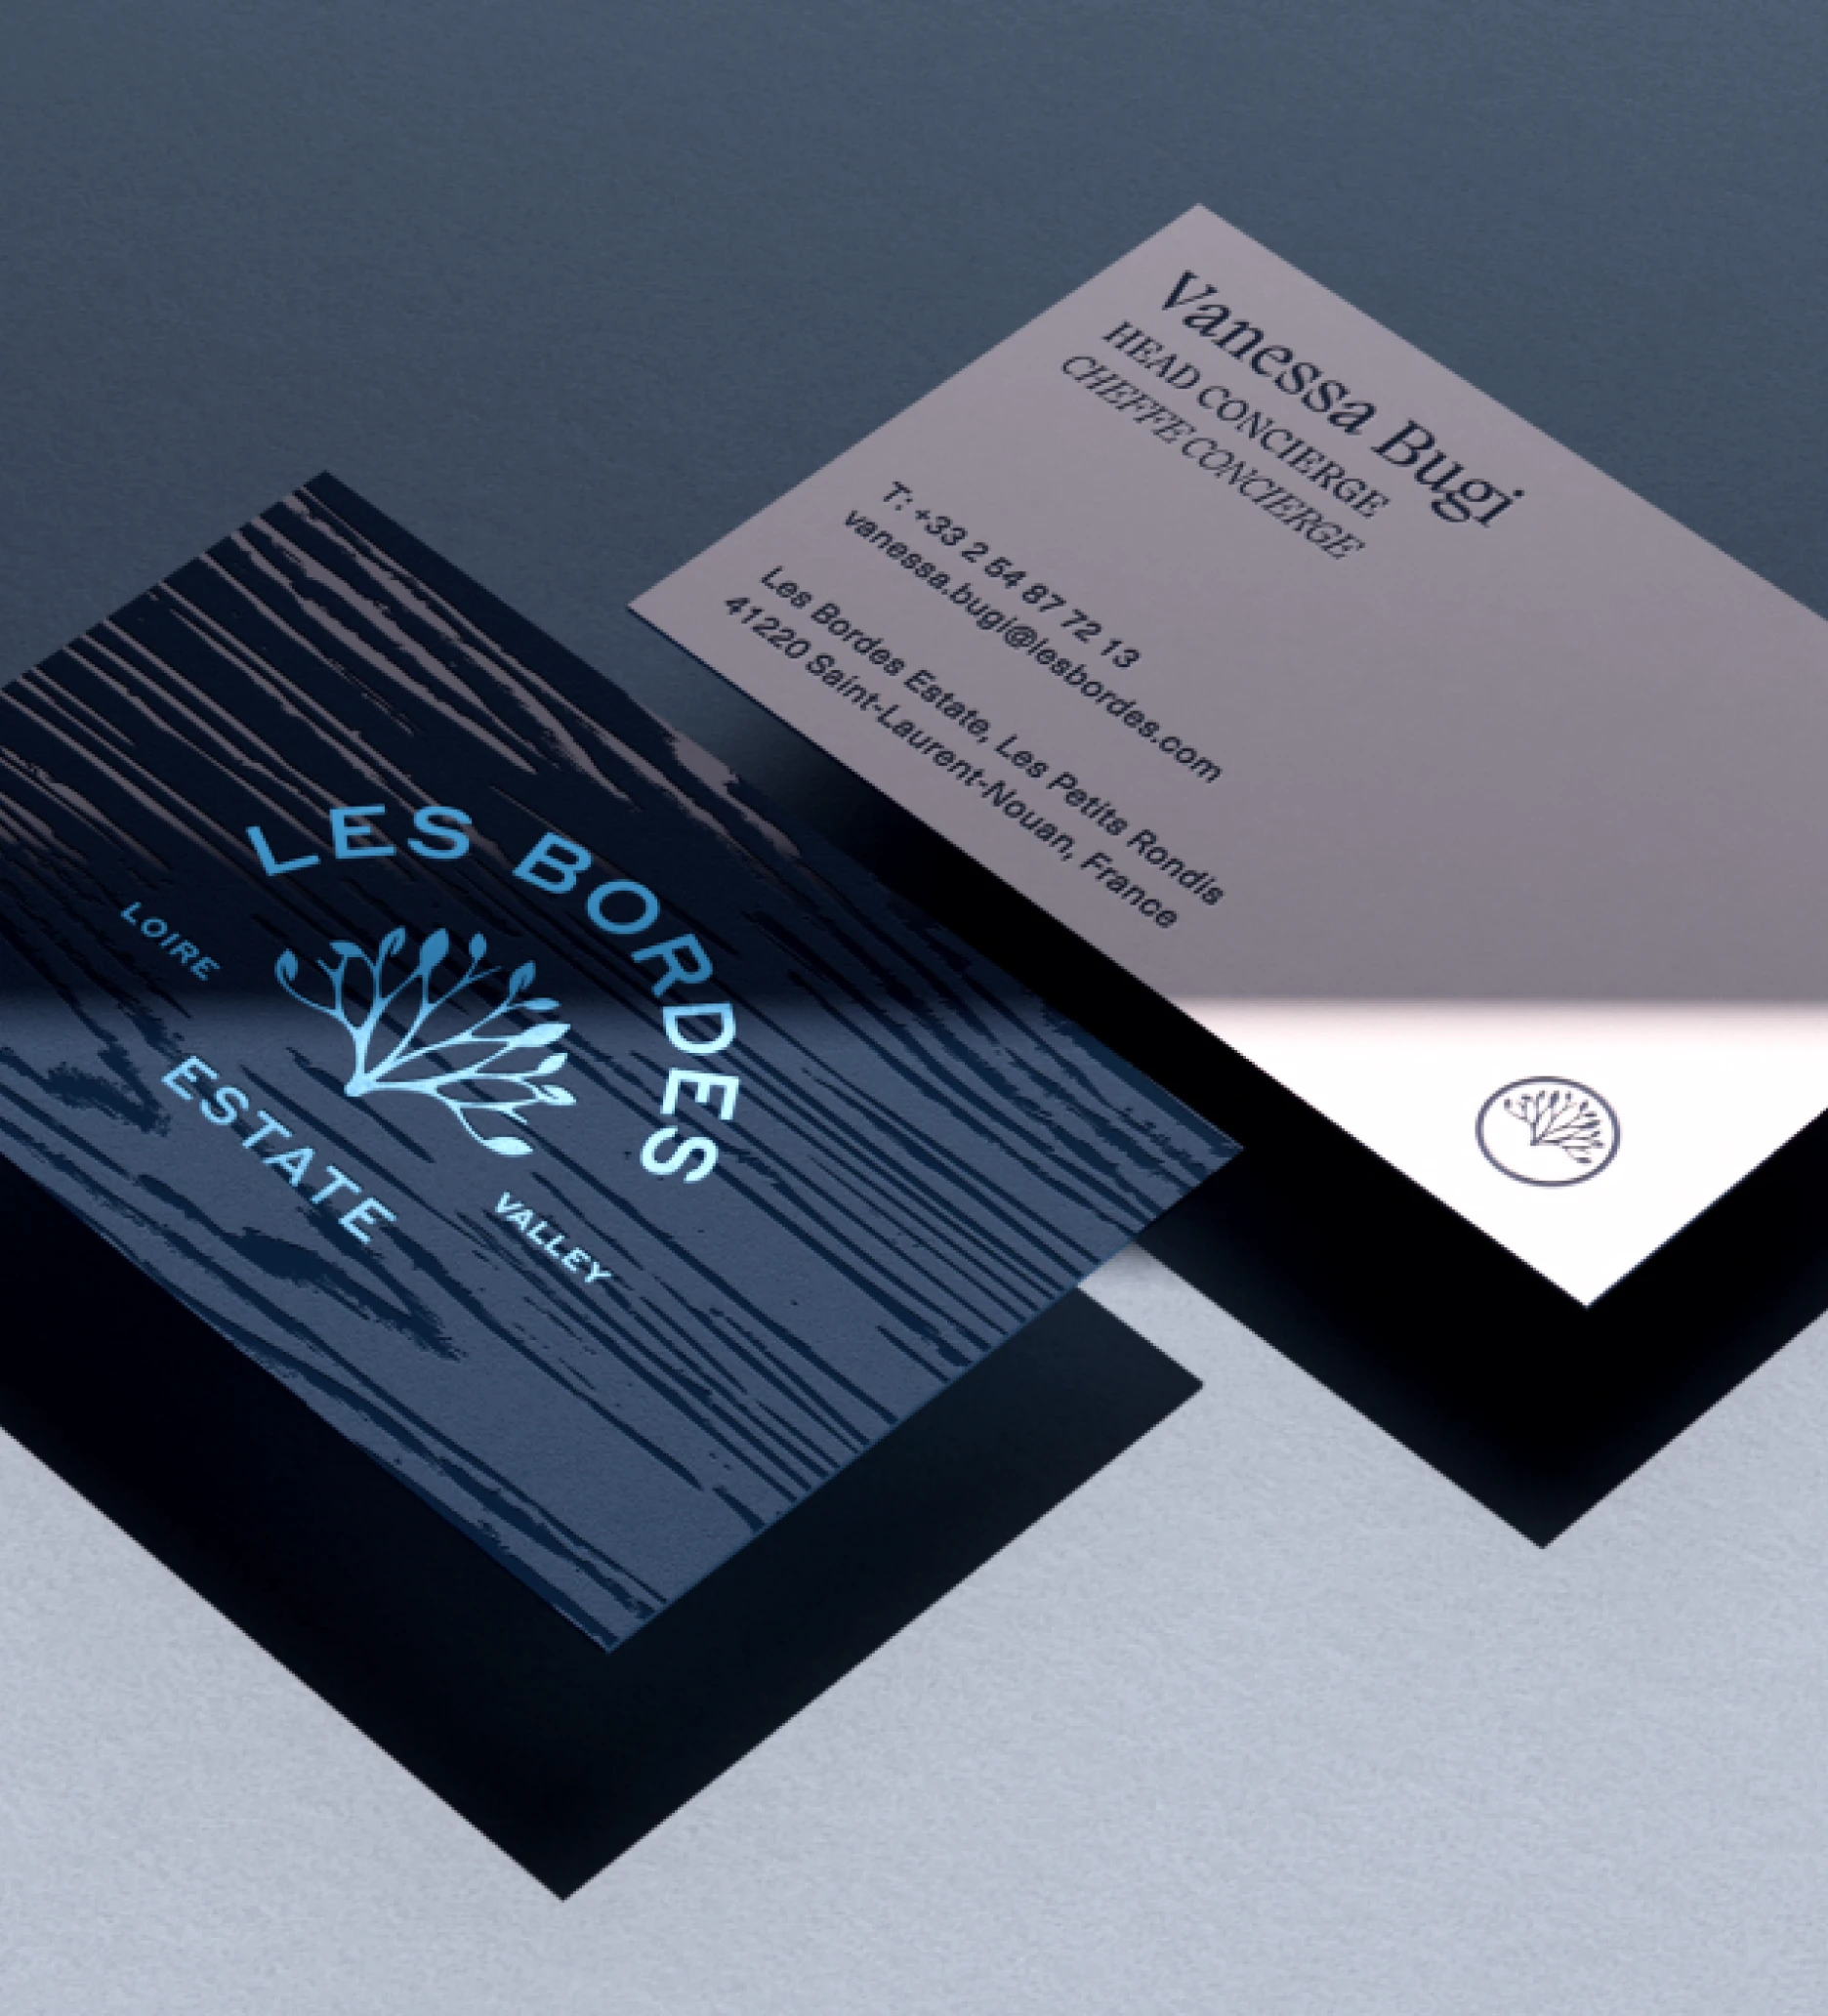 Les Bordes business card stationery design by Allis Studio